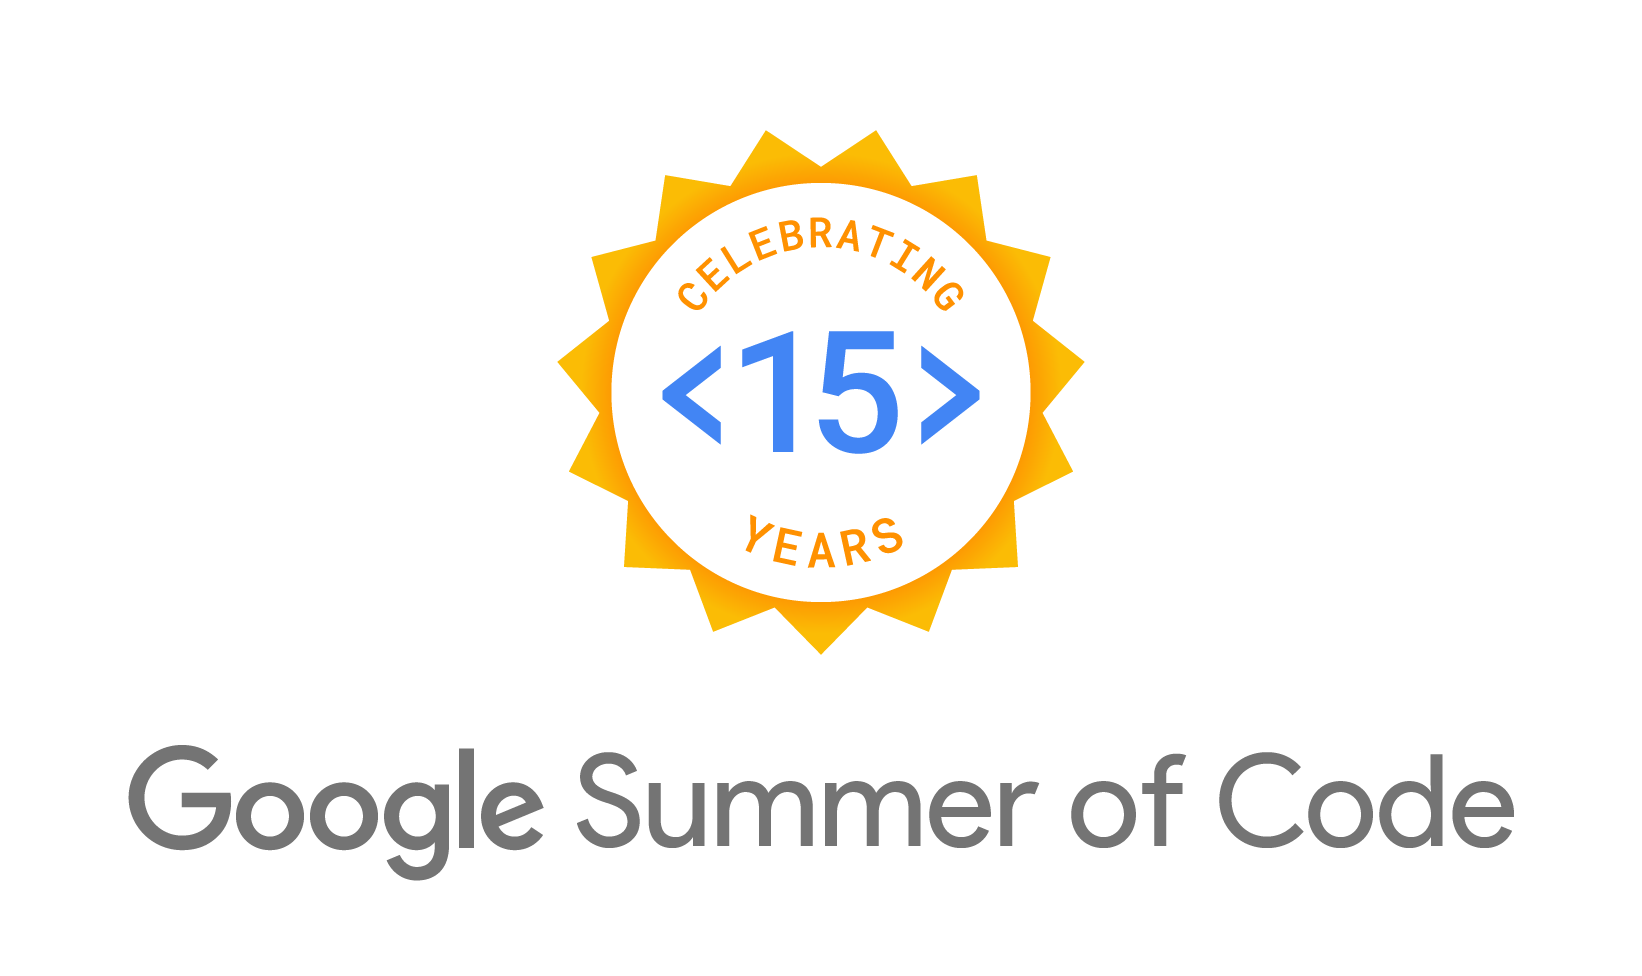 Celebrating 15 Years - Google Summer of Code